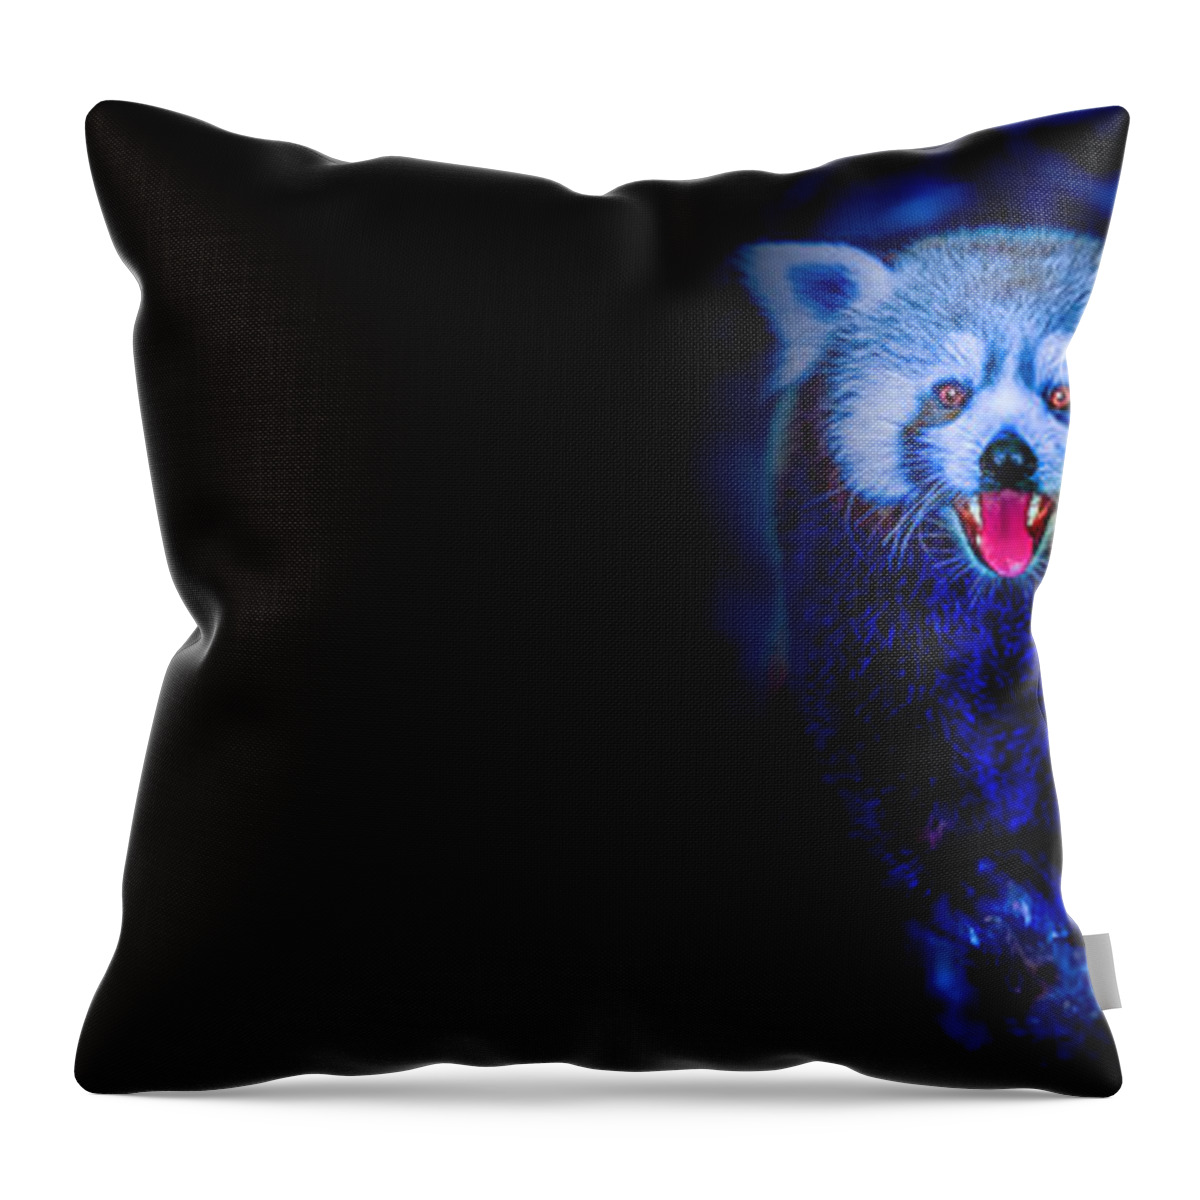 Animals Throw Pillow featuring the photograph Night Panda by Rikk Flohr